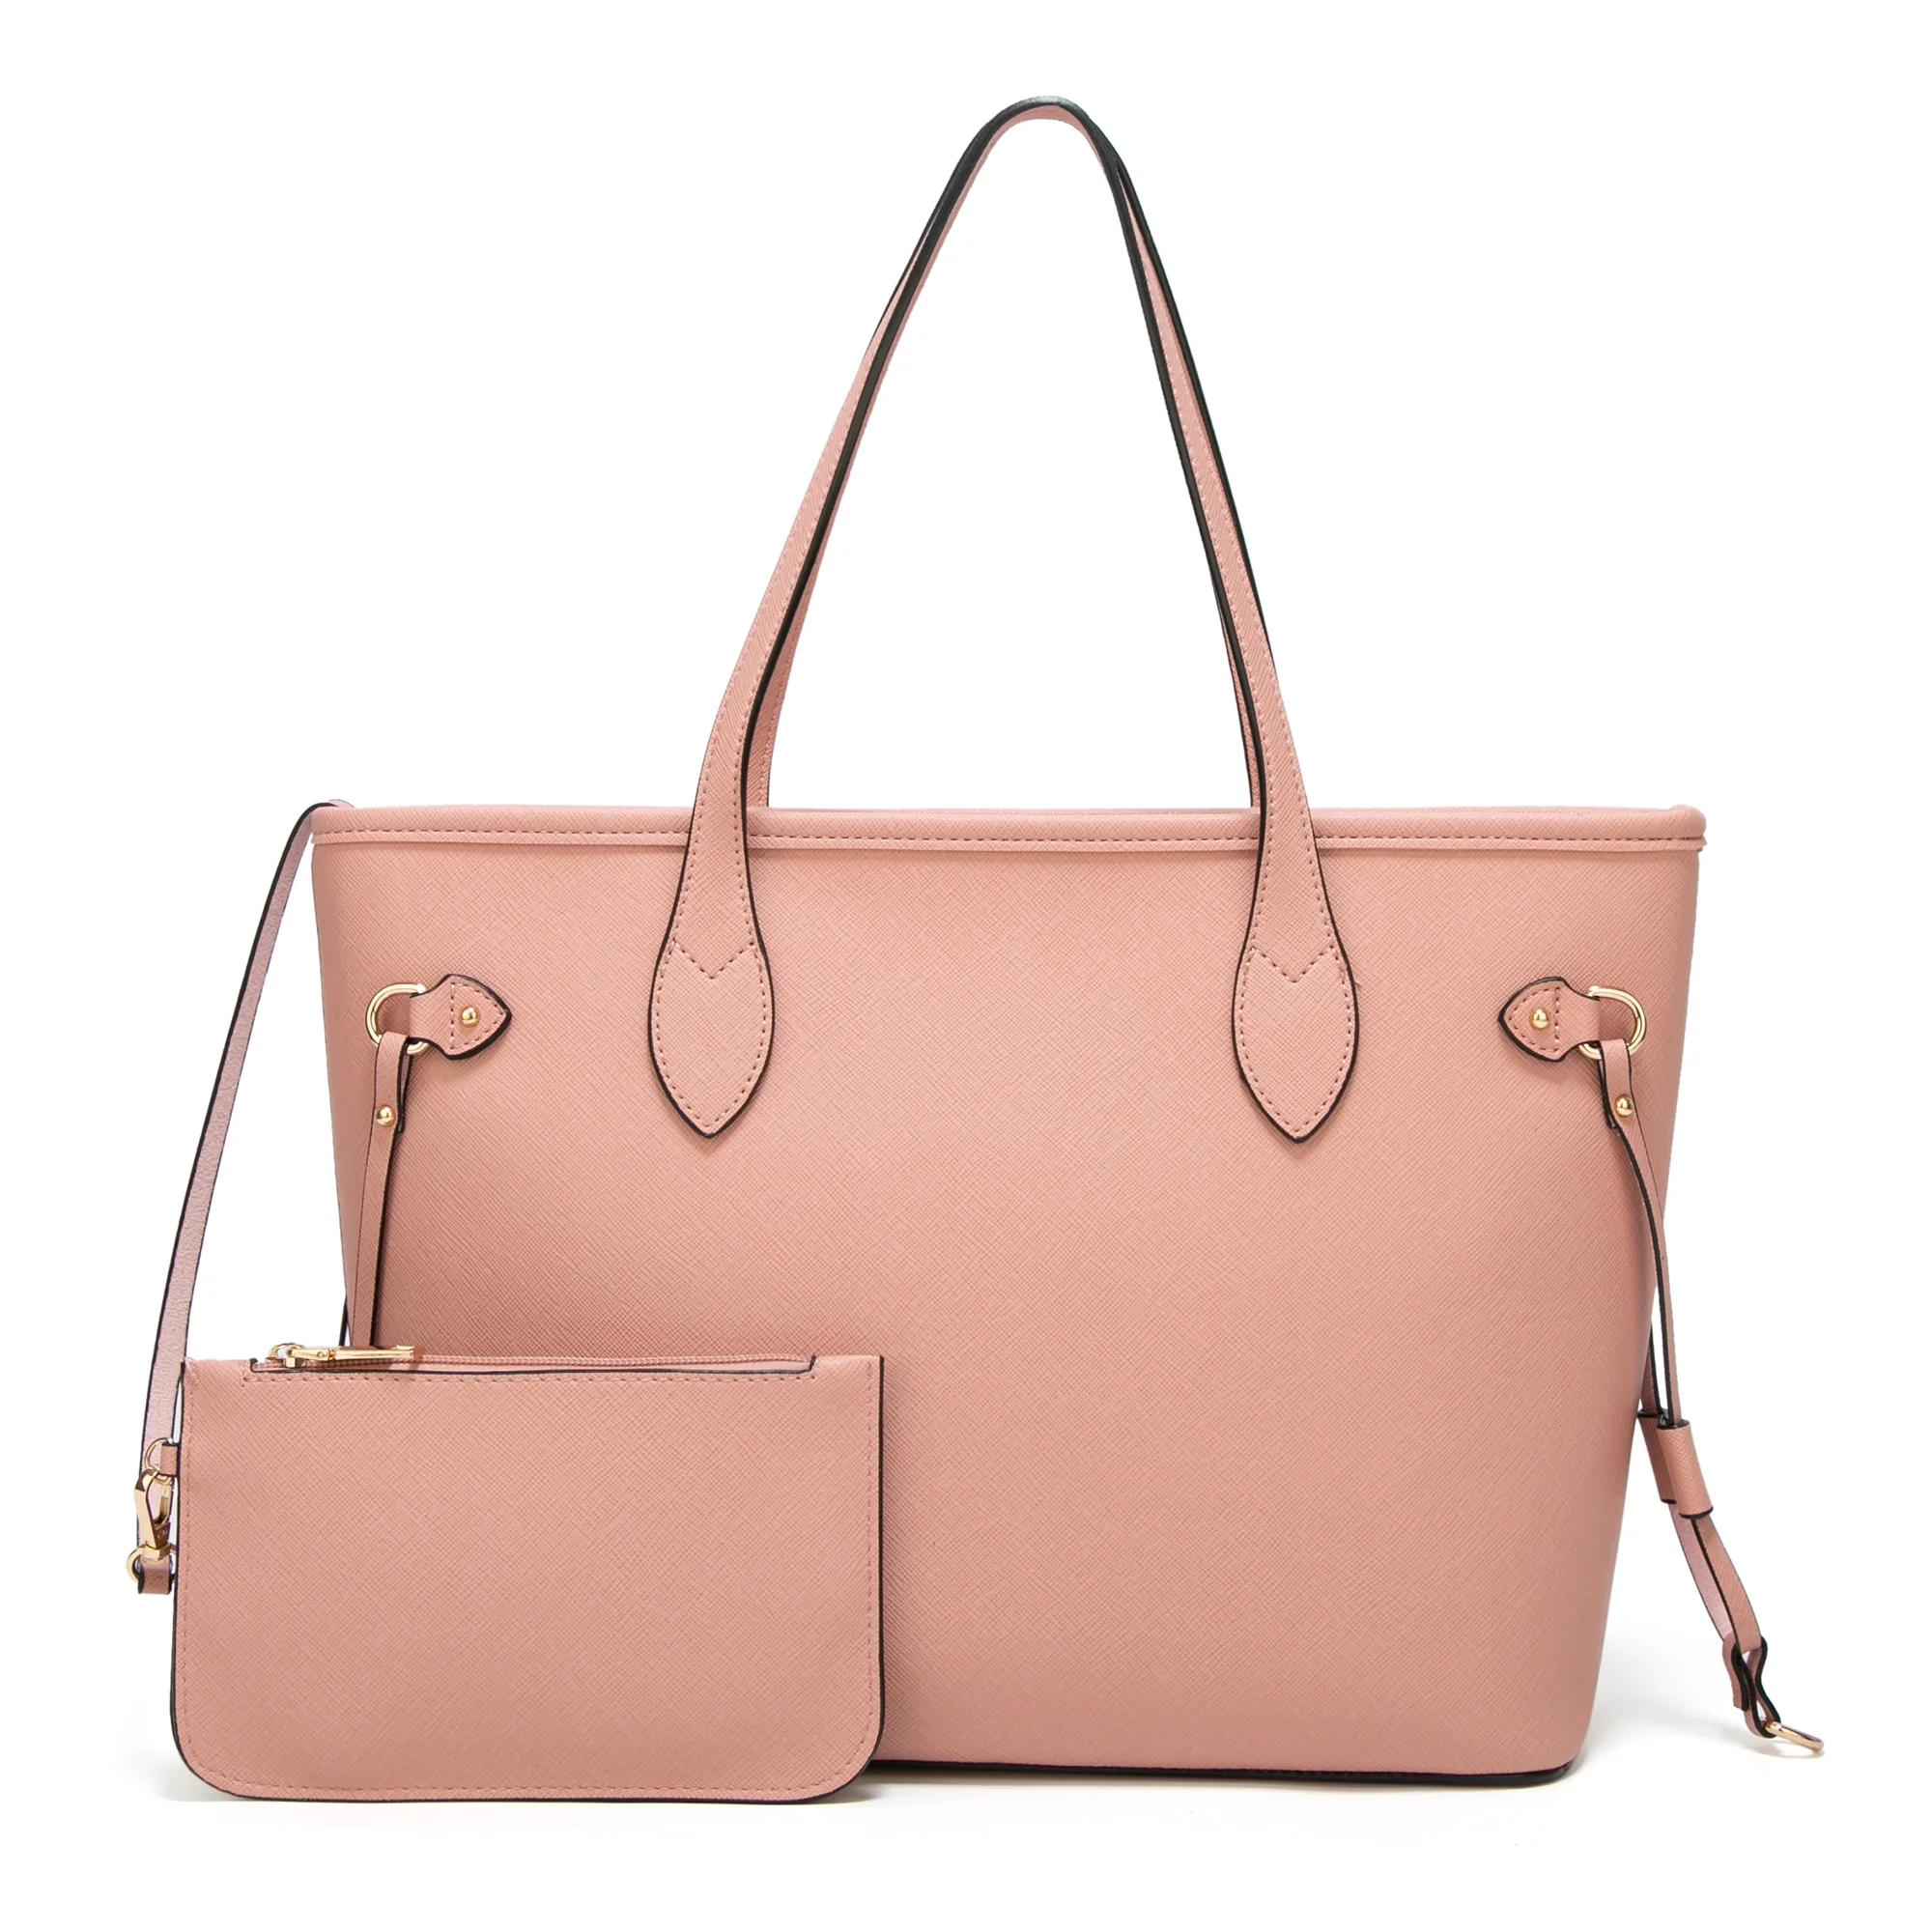 
Pink Satchel Purses and Handbags for Women Shoulder Tote Bags Wallets Top Handle Messenger Hobo 2pcs Set  (62371363314)